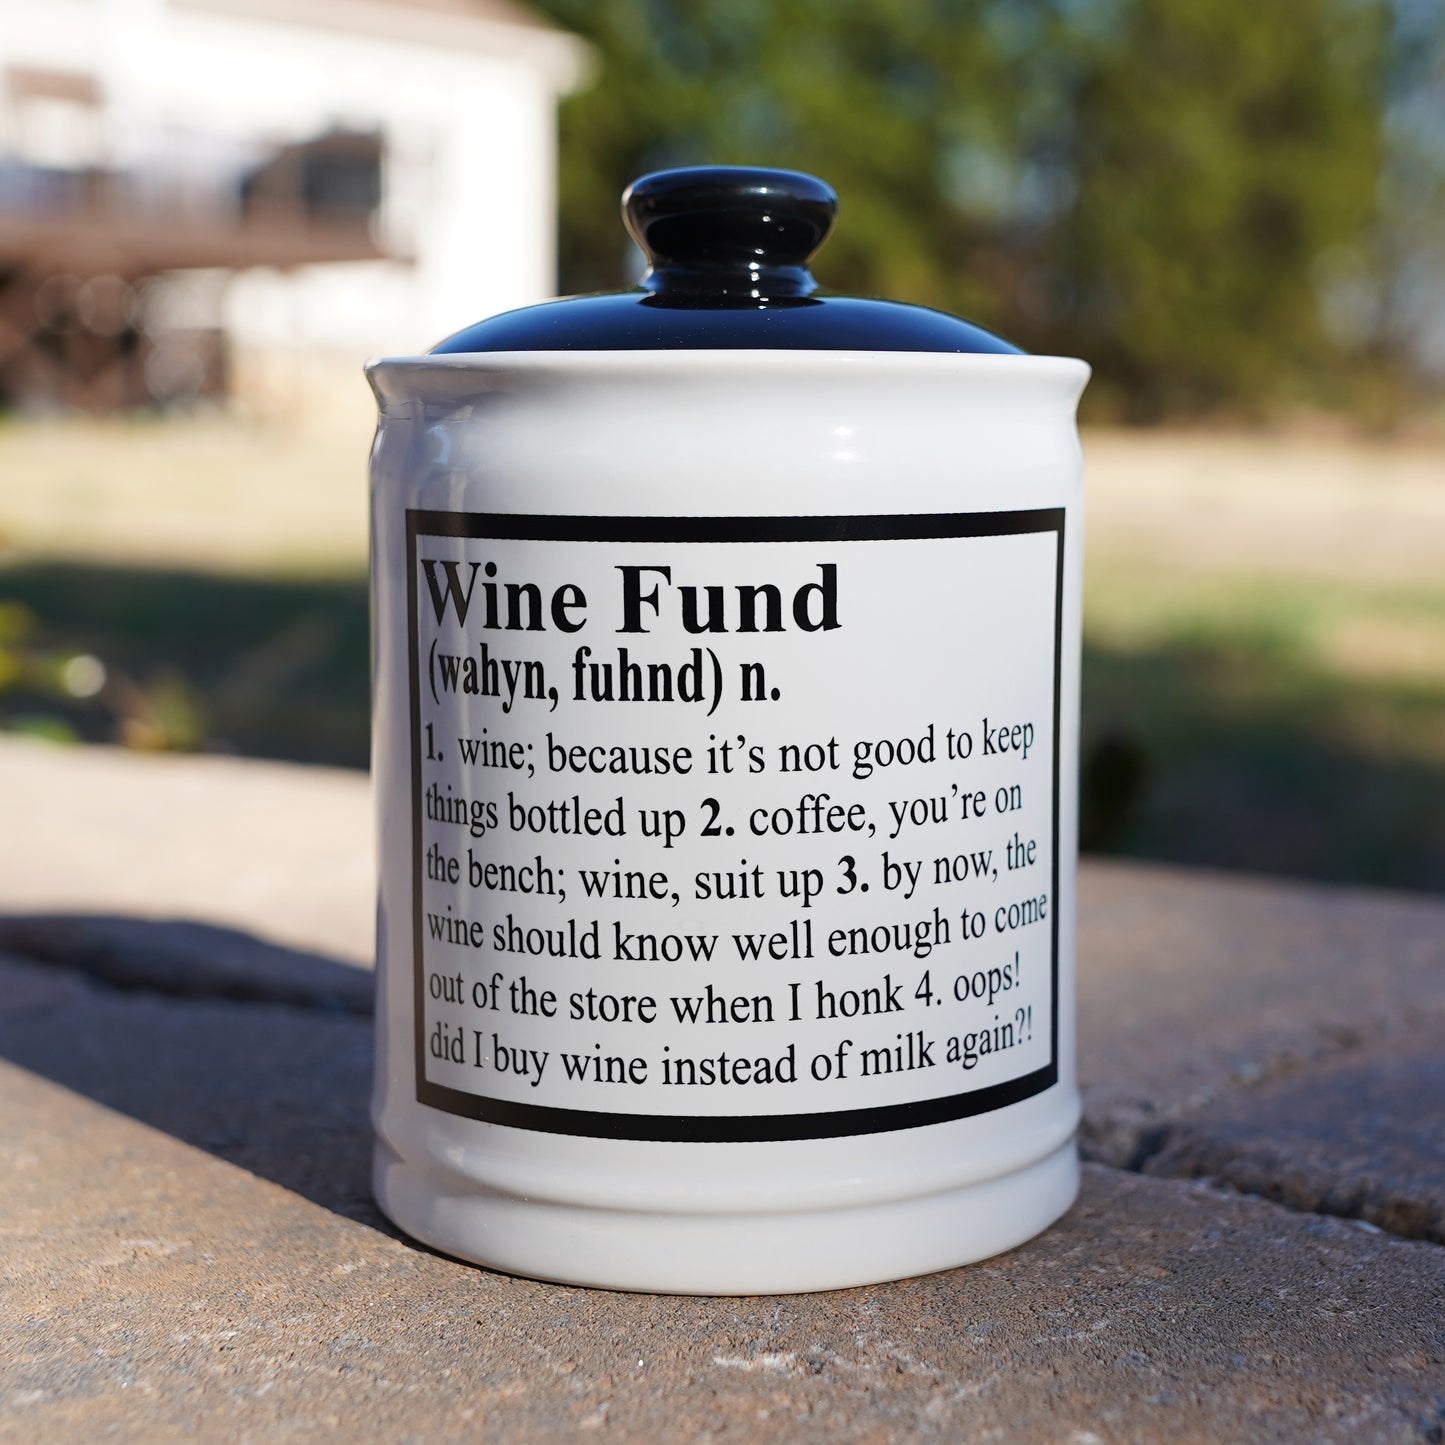 Cottage Creek Wine Fund Piggy Bank, Ceramic, 6", Multicolored Wine Candy Jar